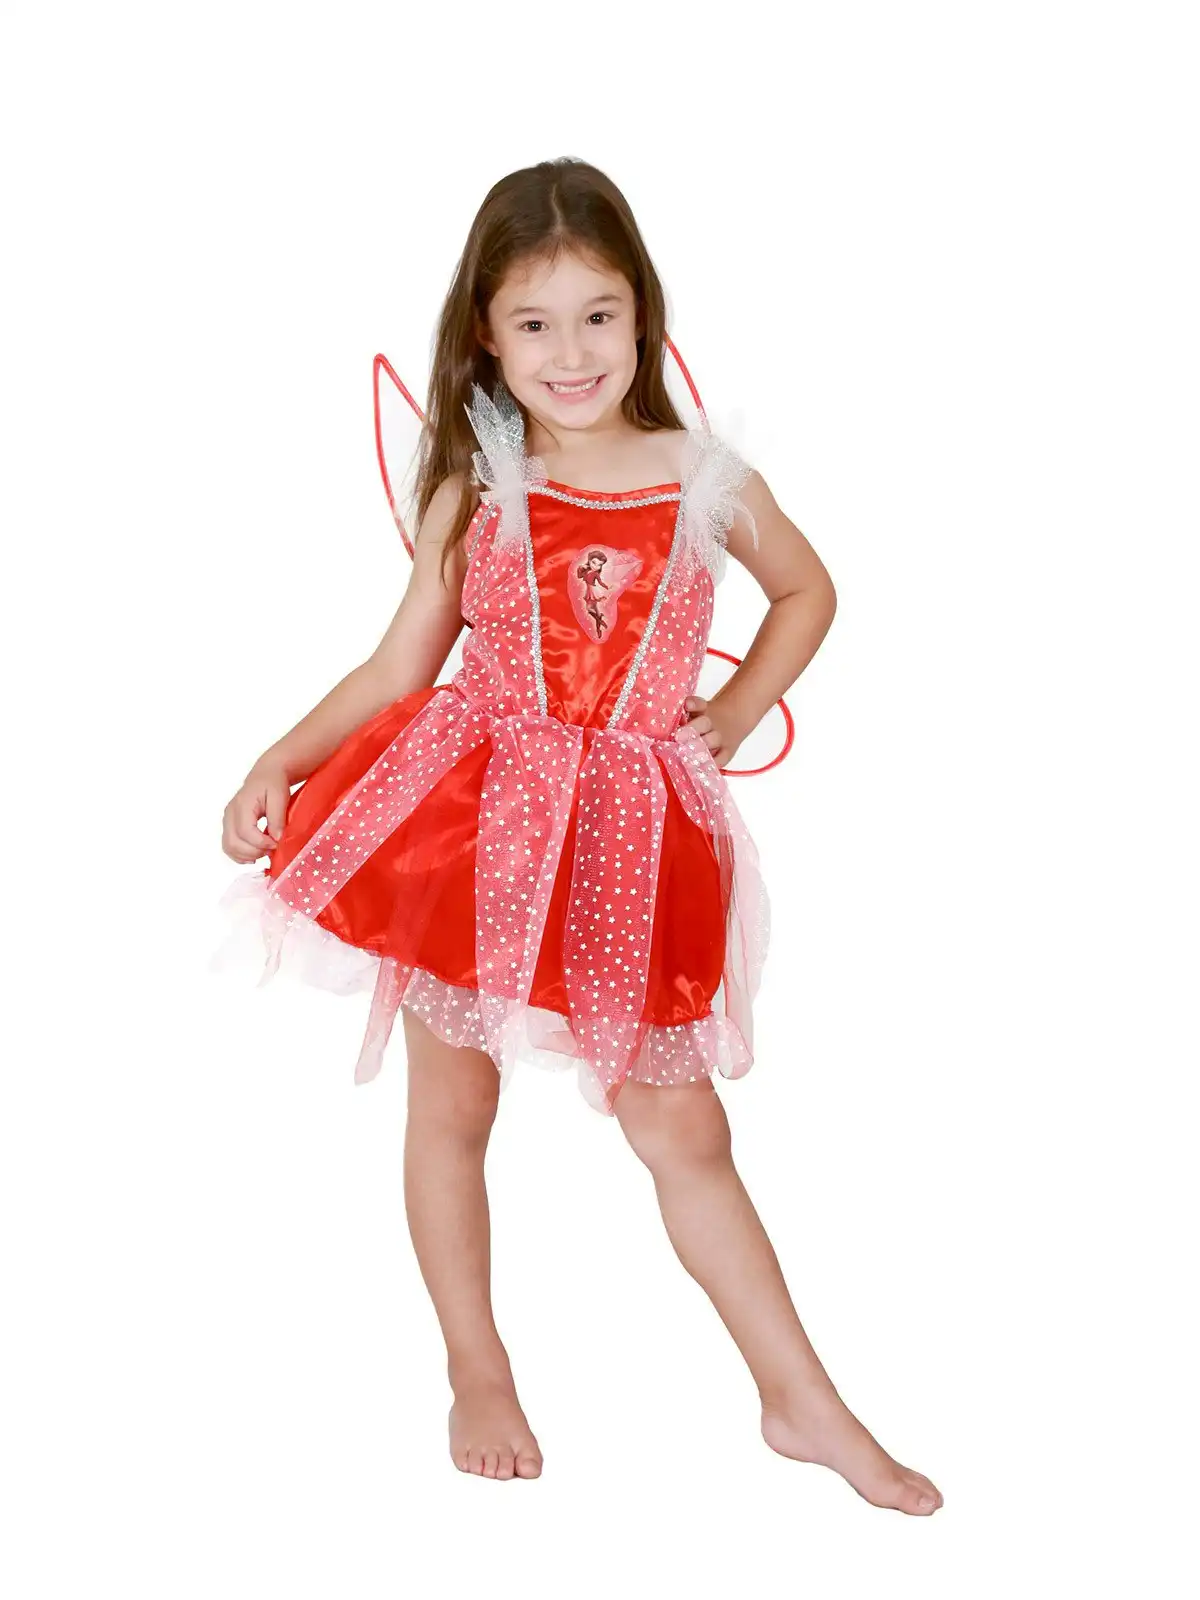 Disney Rosetta Dress Up Halloween Party Costume Kids/Girls/Children Size 4-6